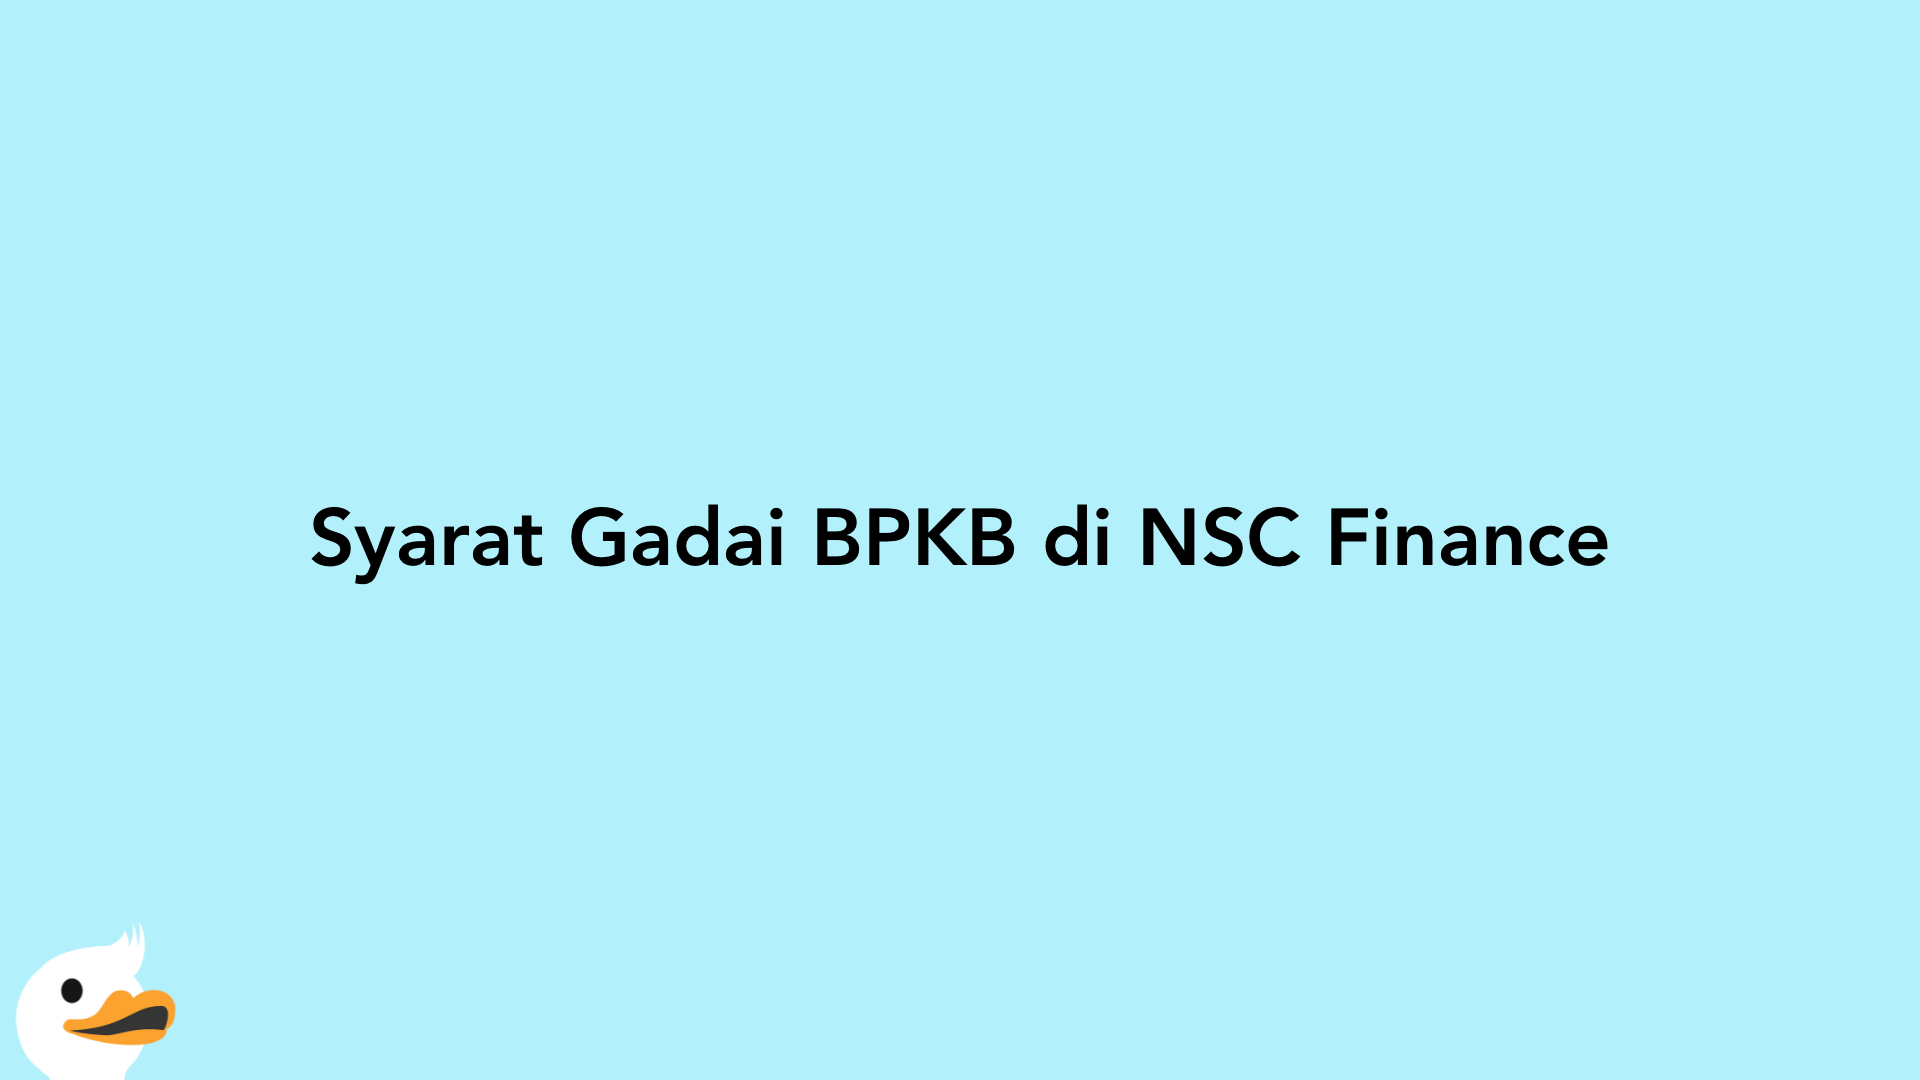 Syarat Gadai BPKB di NSC Finance